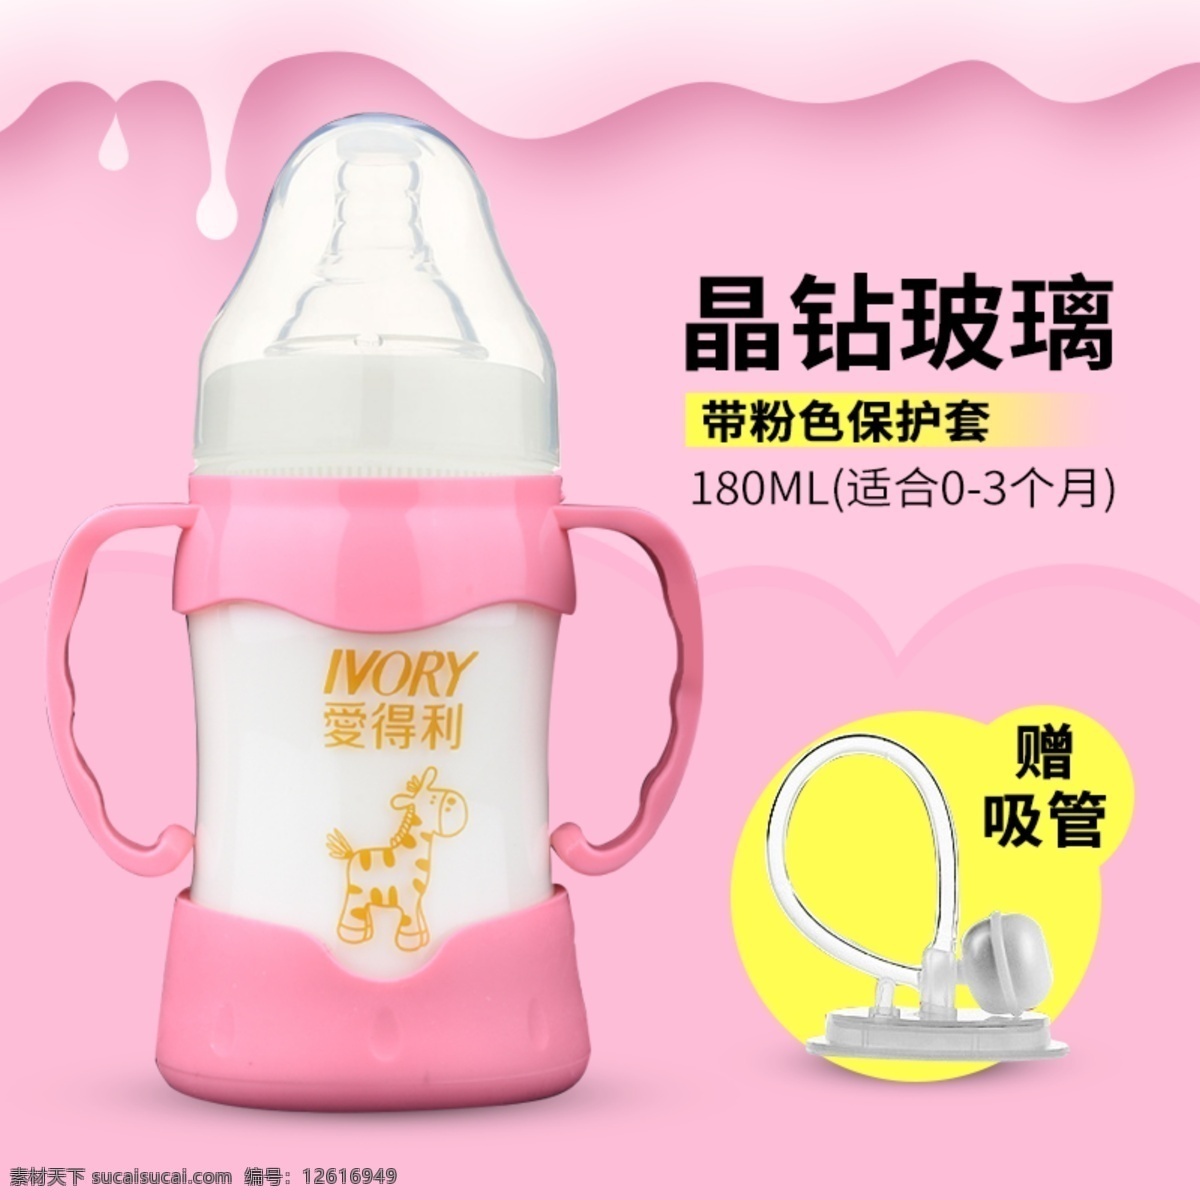 ml 奶瓶 淘宝 电商 主 图 直通车 粉色 牛奶 主图 母婴 宝宝奶瓶